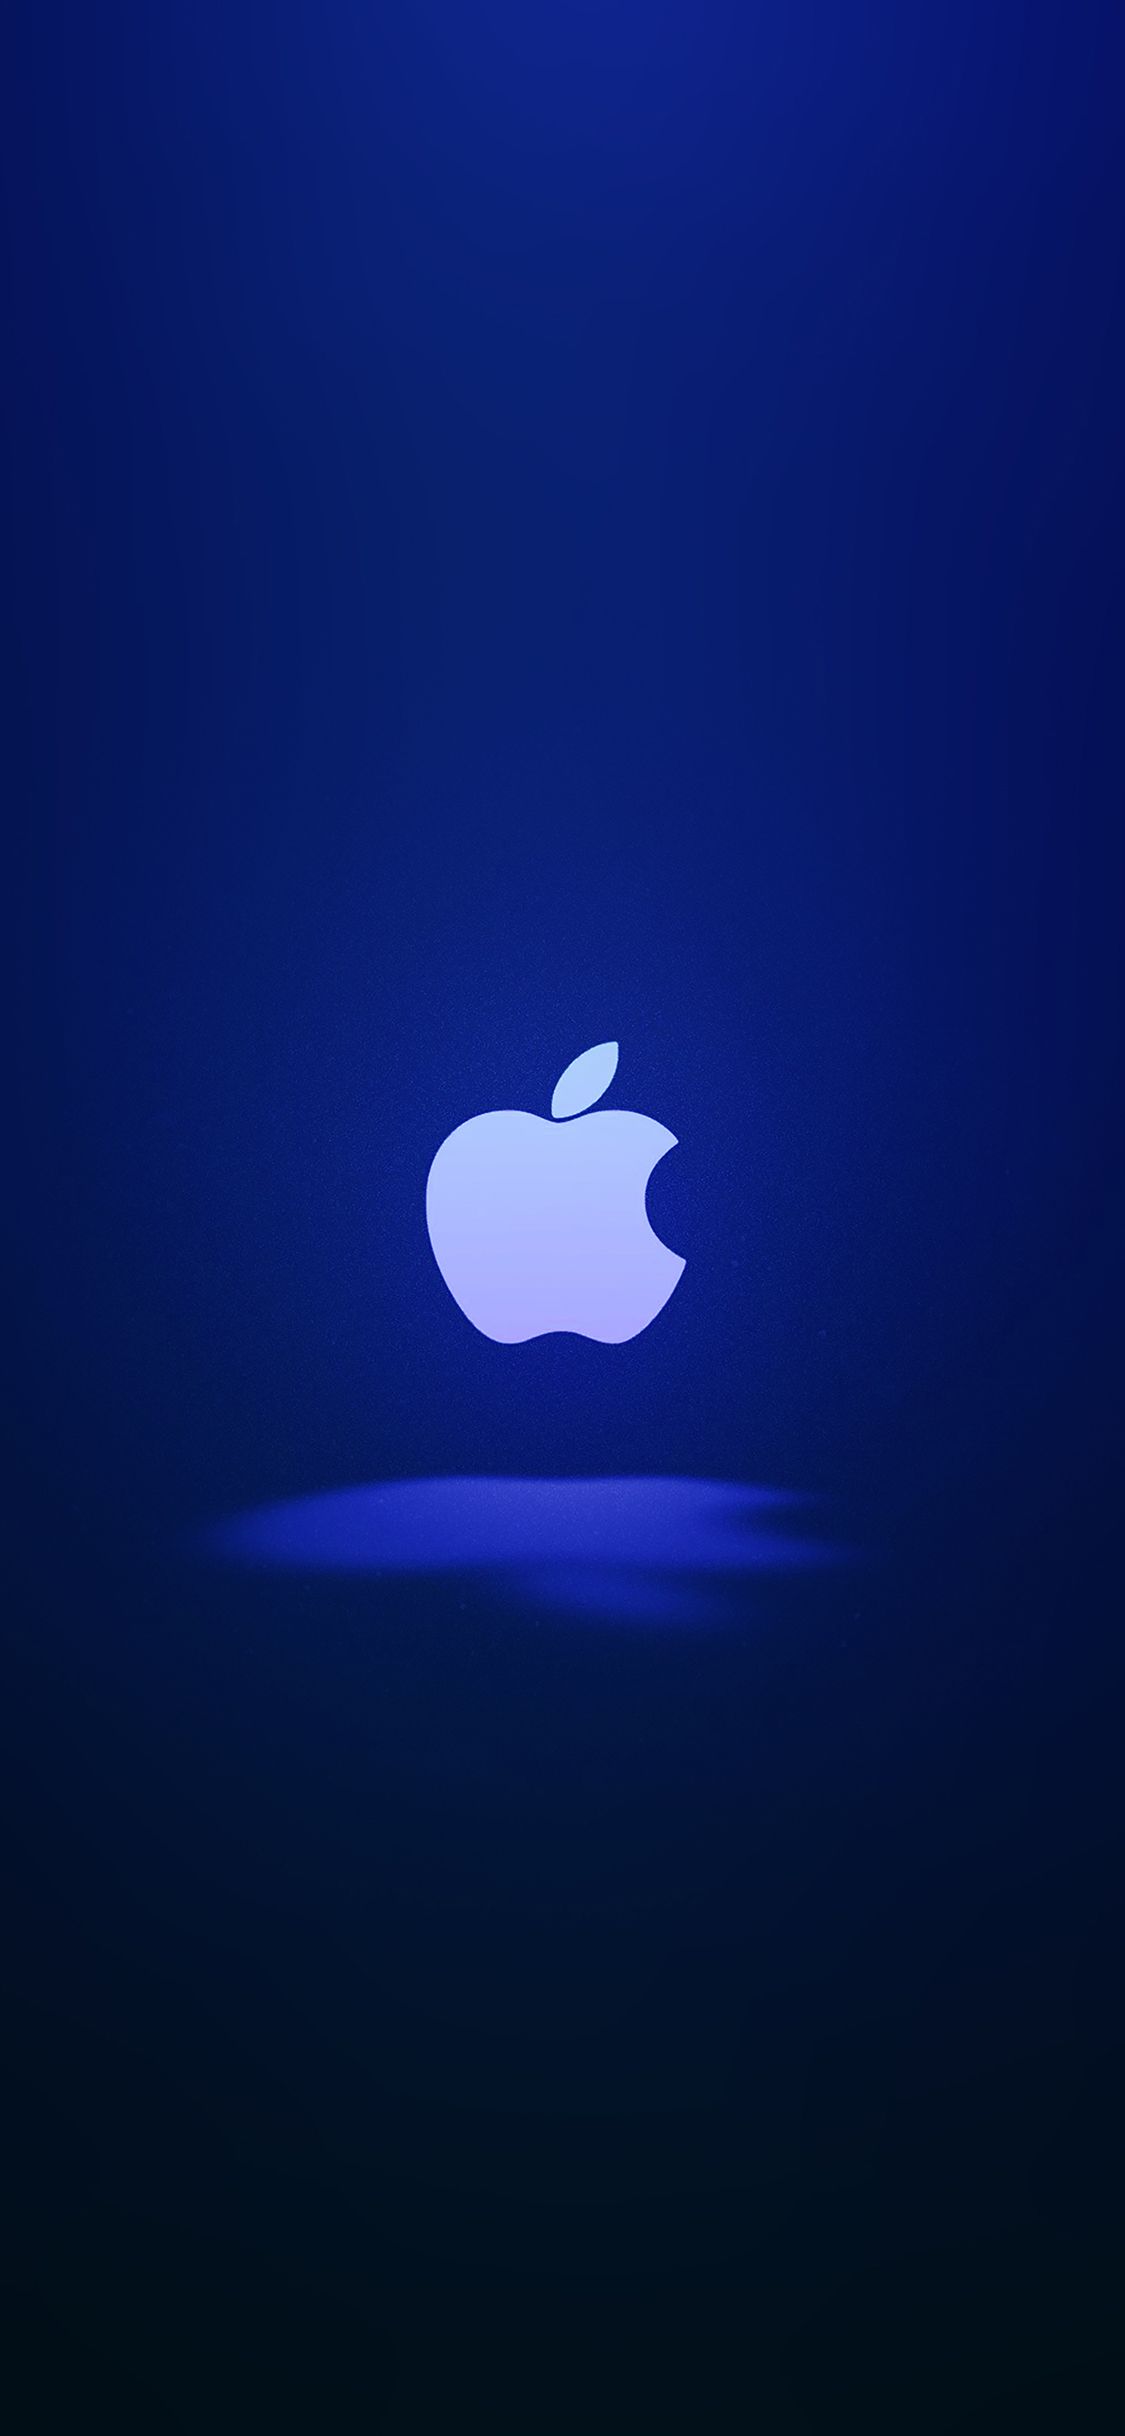 iPhoneXpapers logo love mania blue